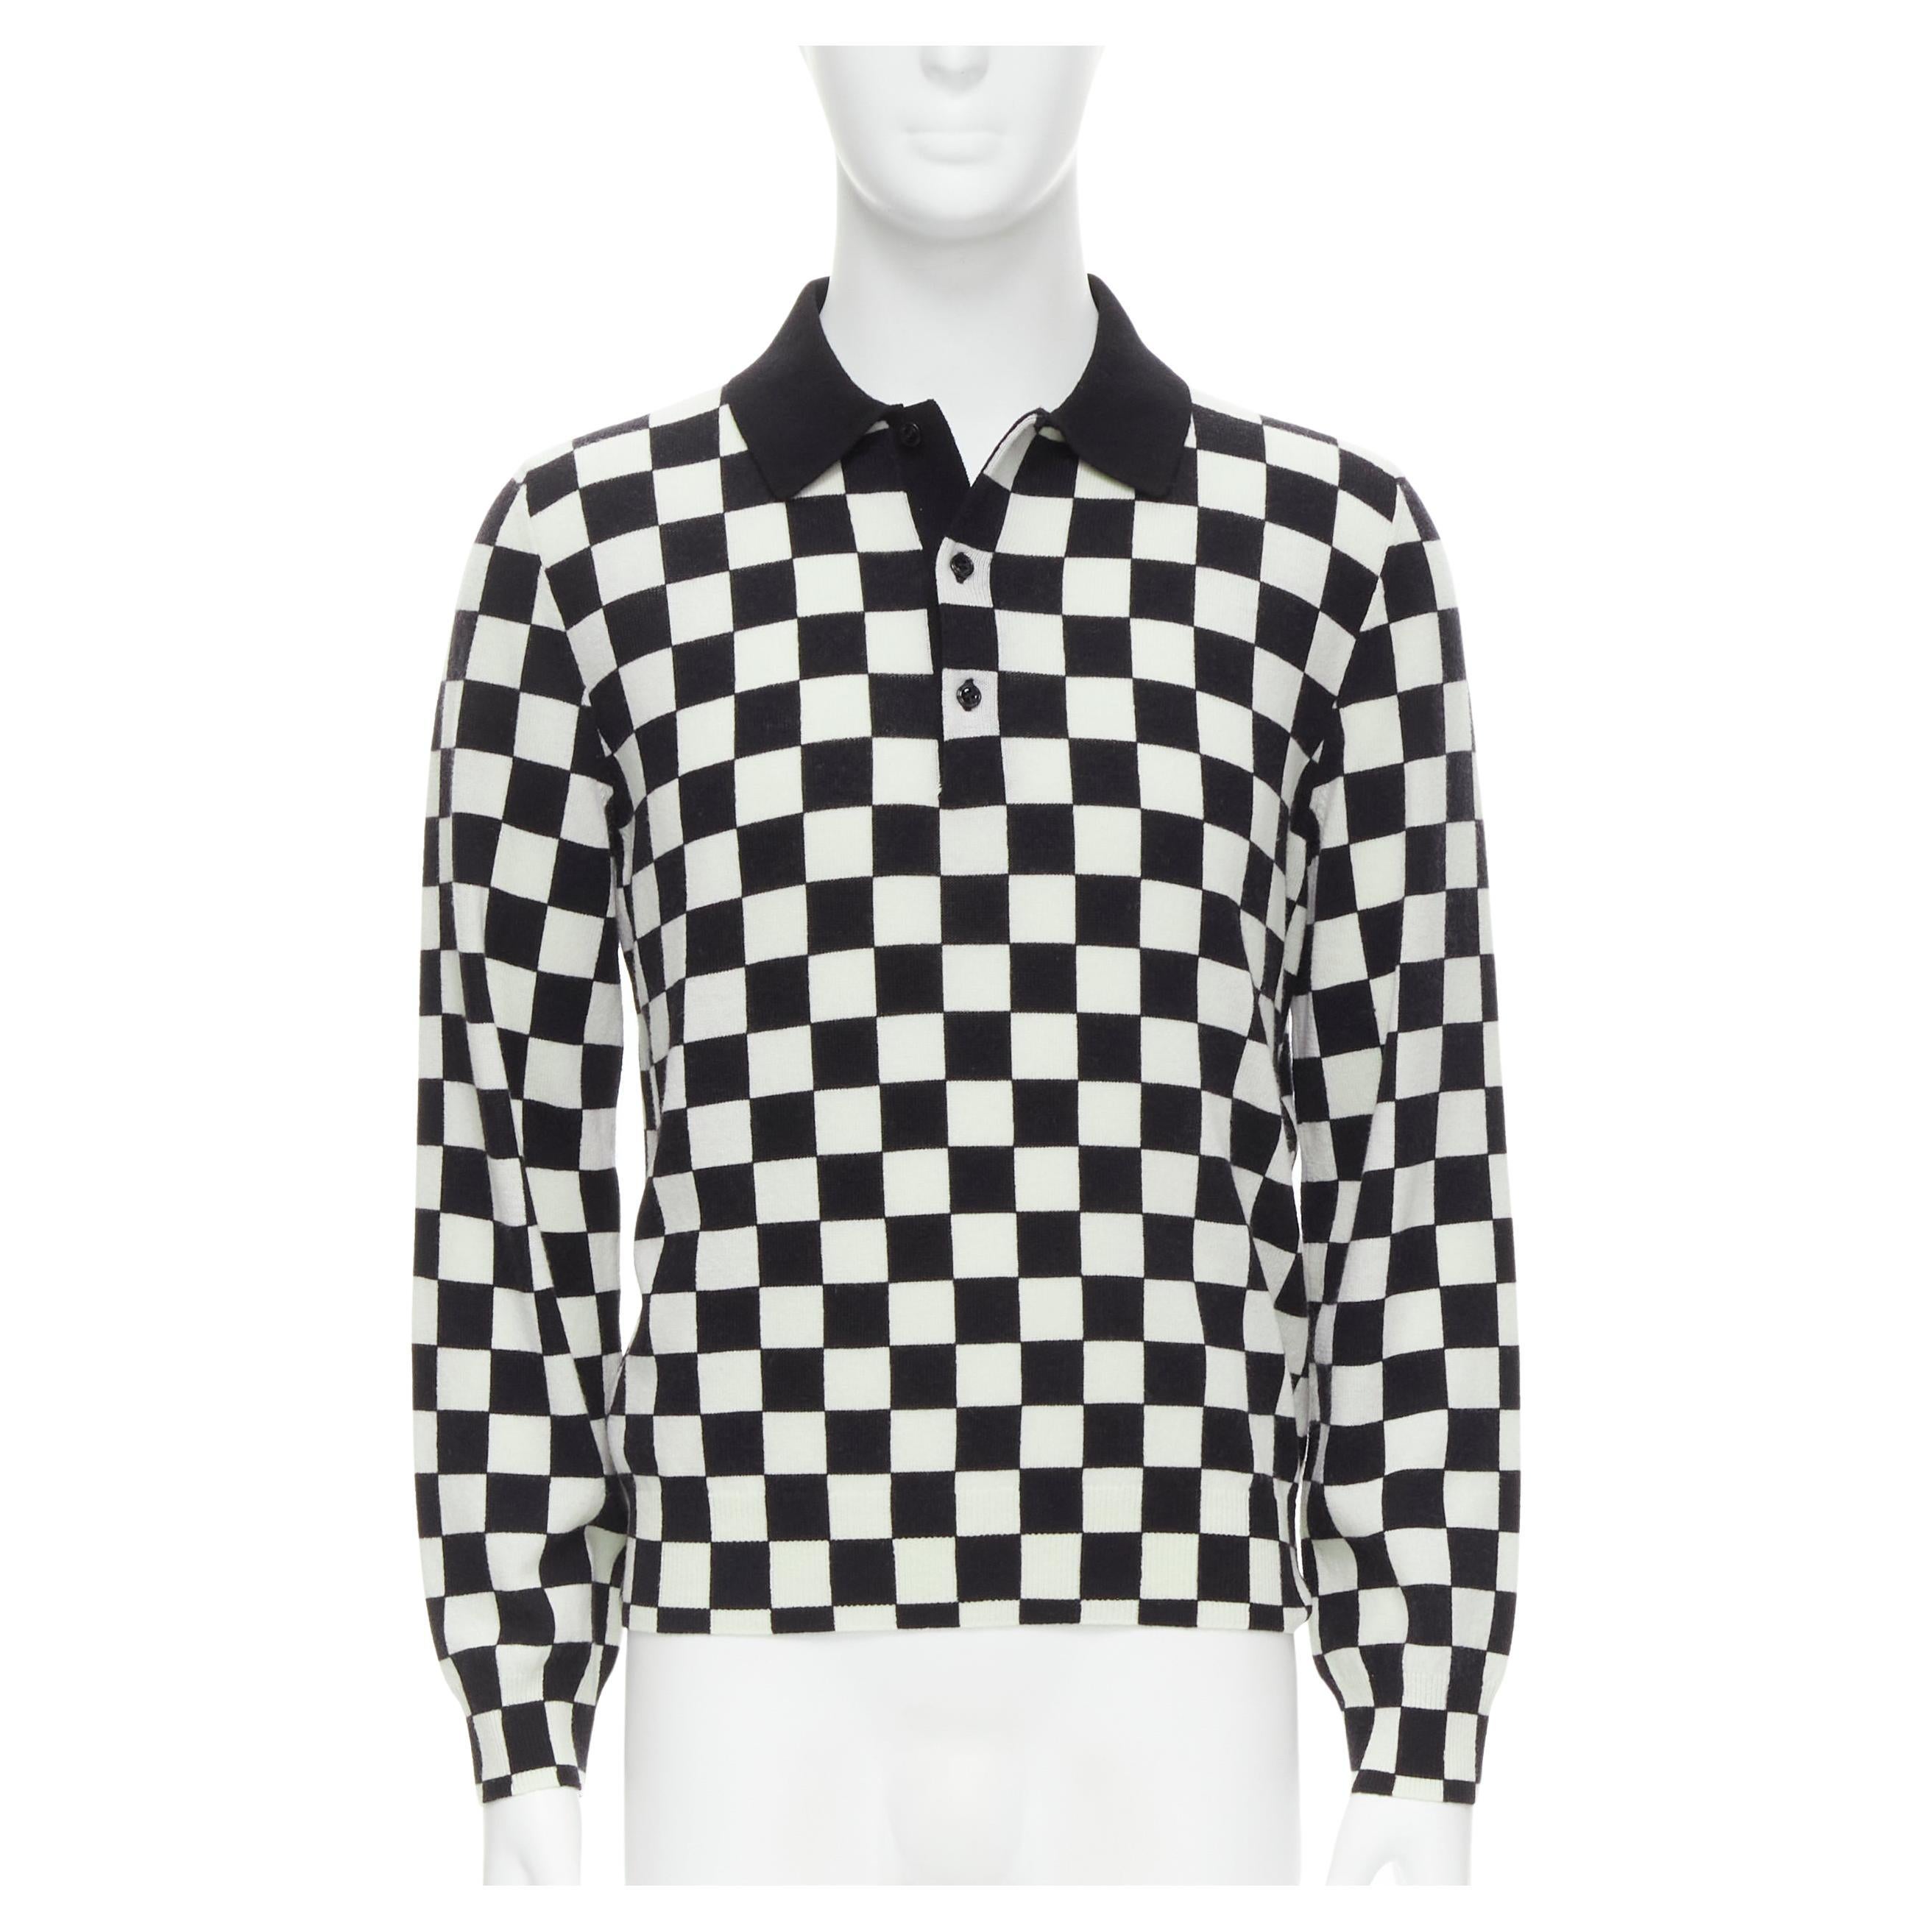 new CELINE Hedi Slimane 2019 Runway black white Damier checkered polo sweater M